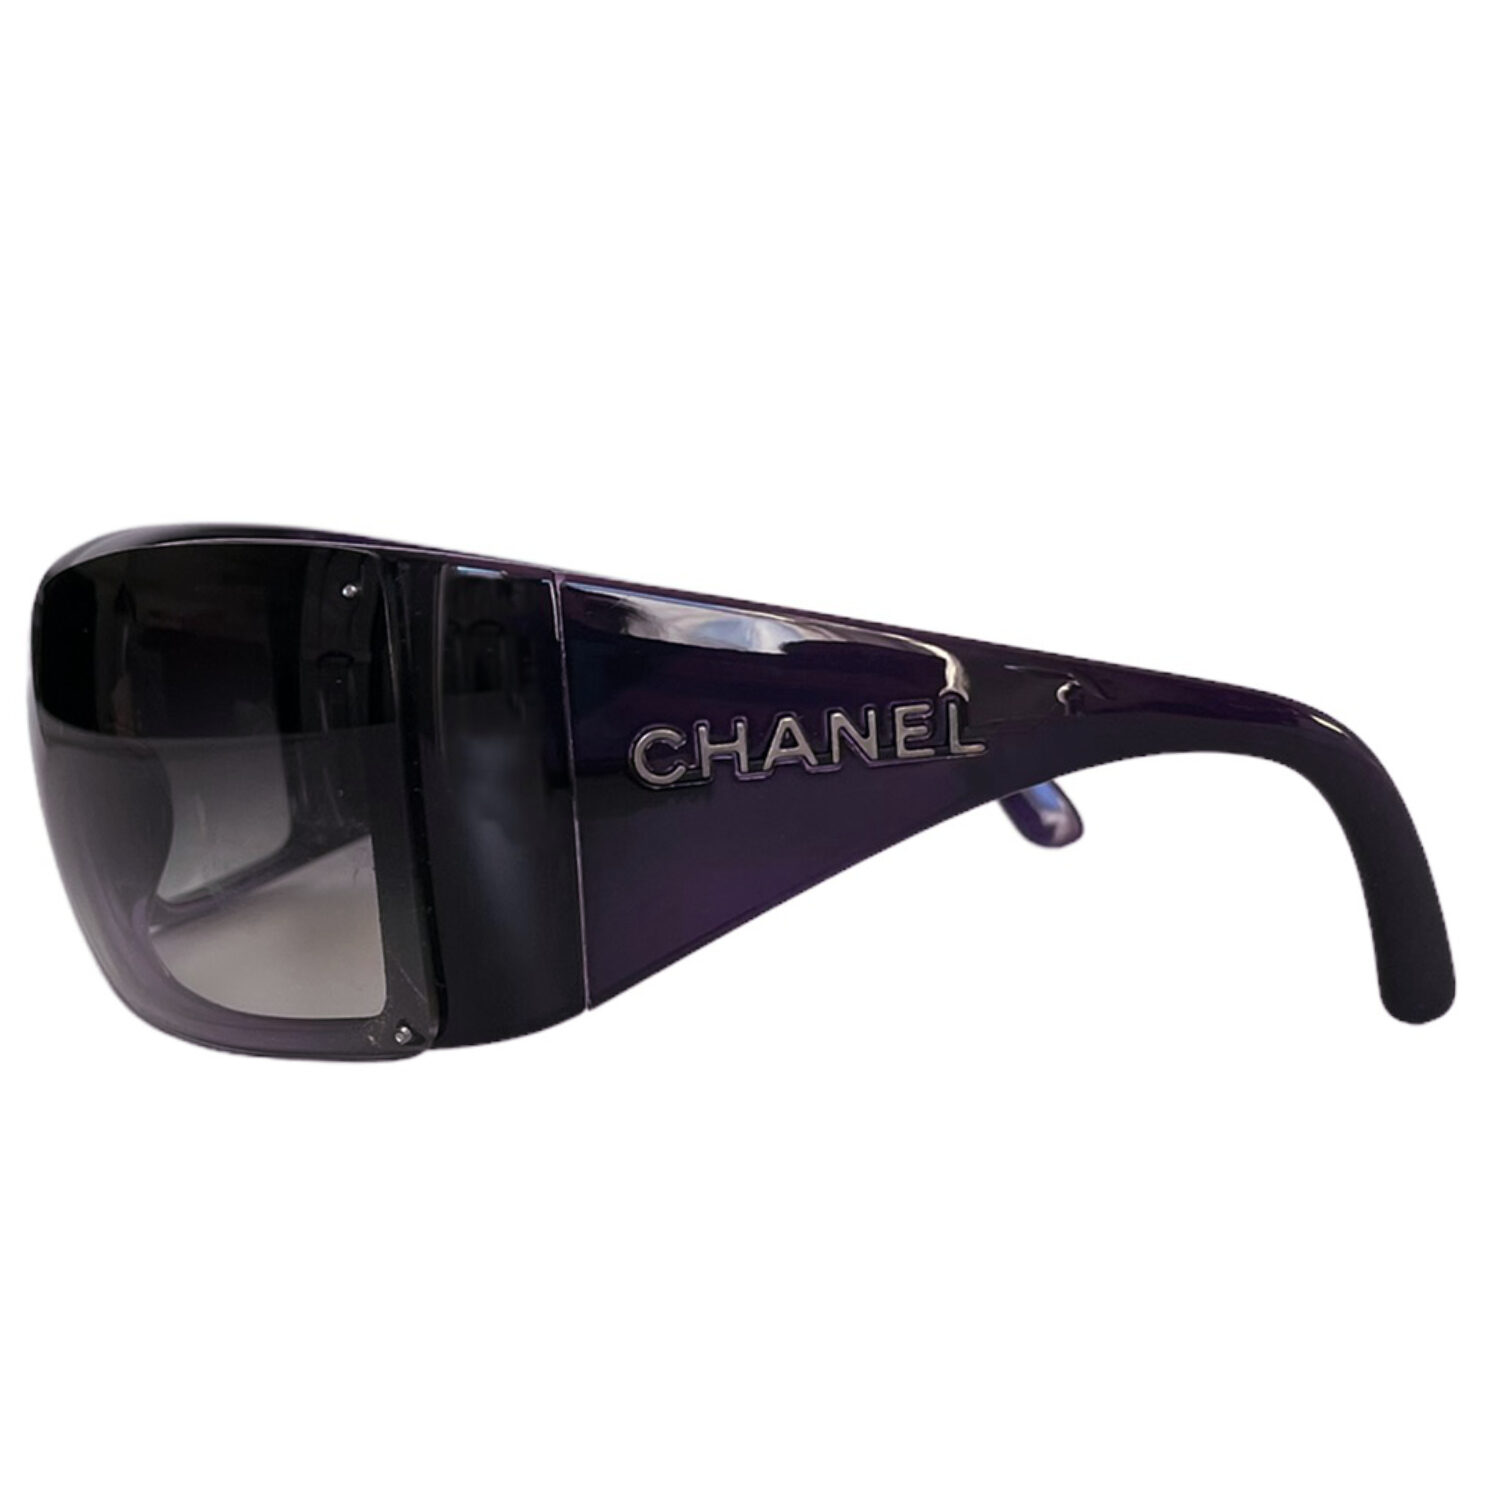 Vintage Chanel Spellout Wraparound Sunglasses in Purple | NITRYL